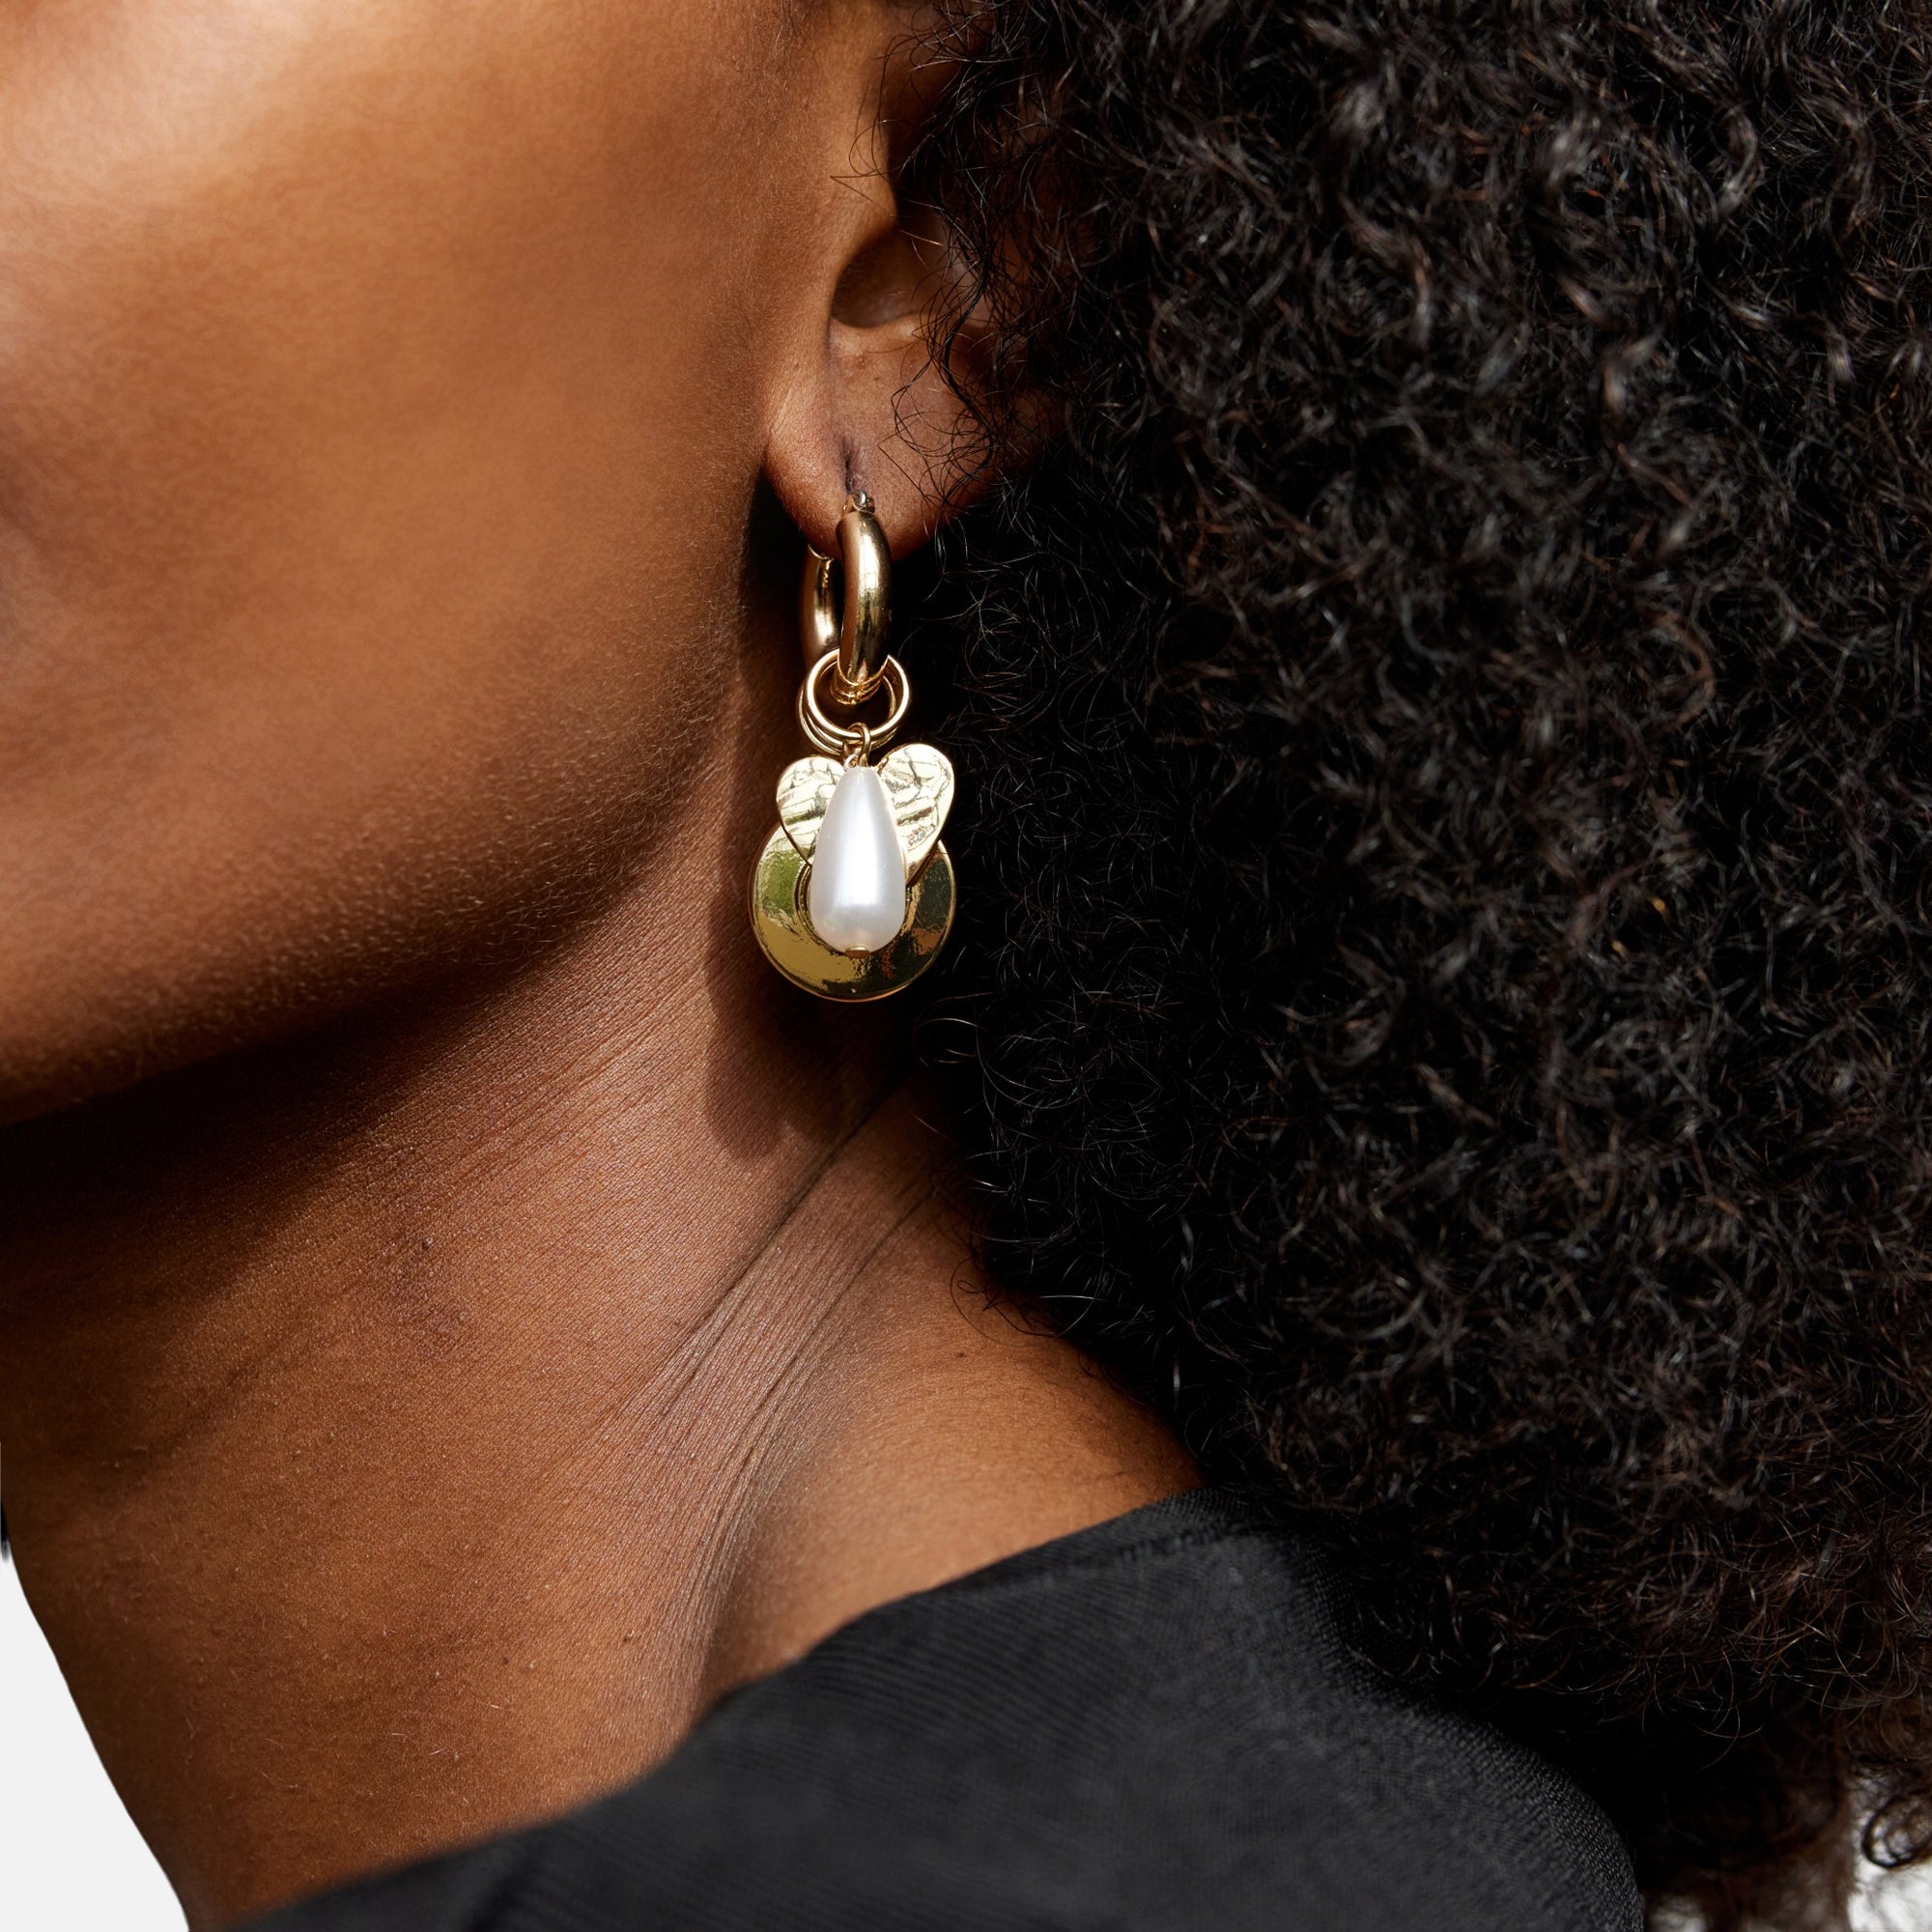 Golden hoop earrings with interchangeable charms 